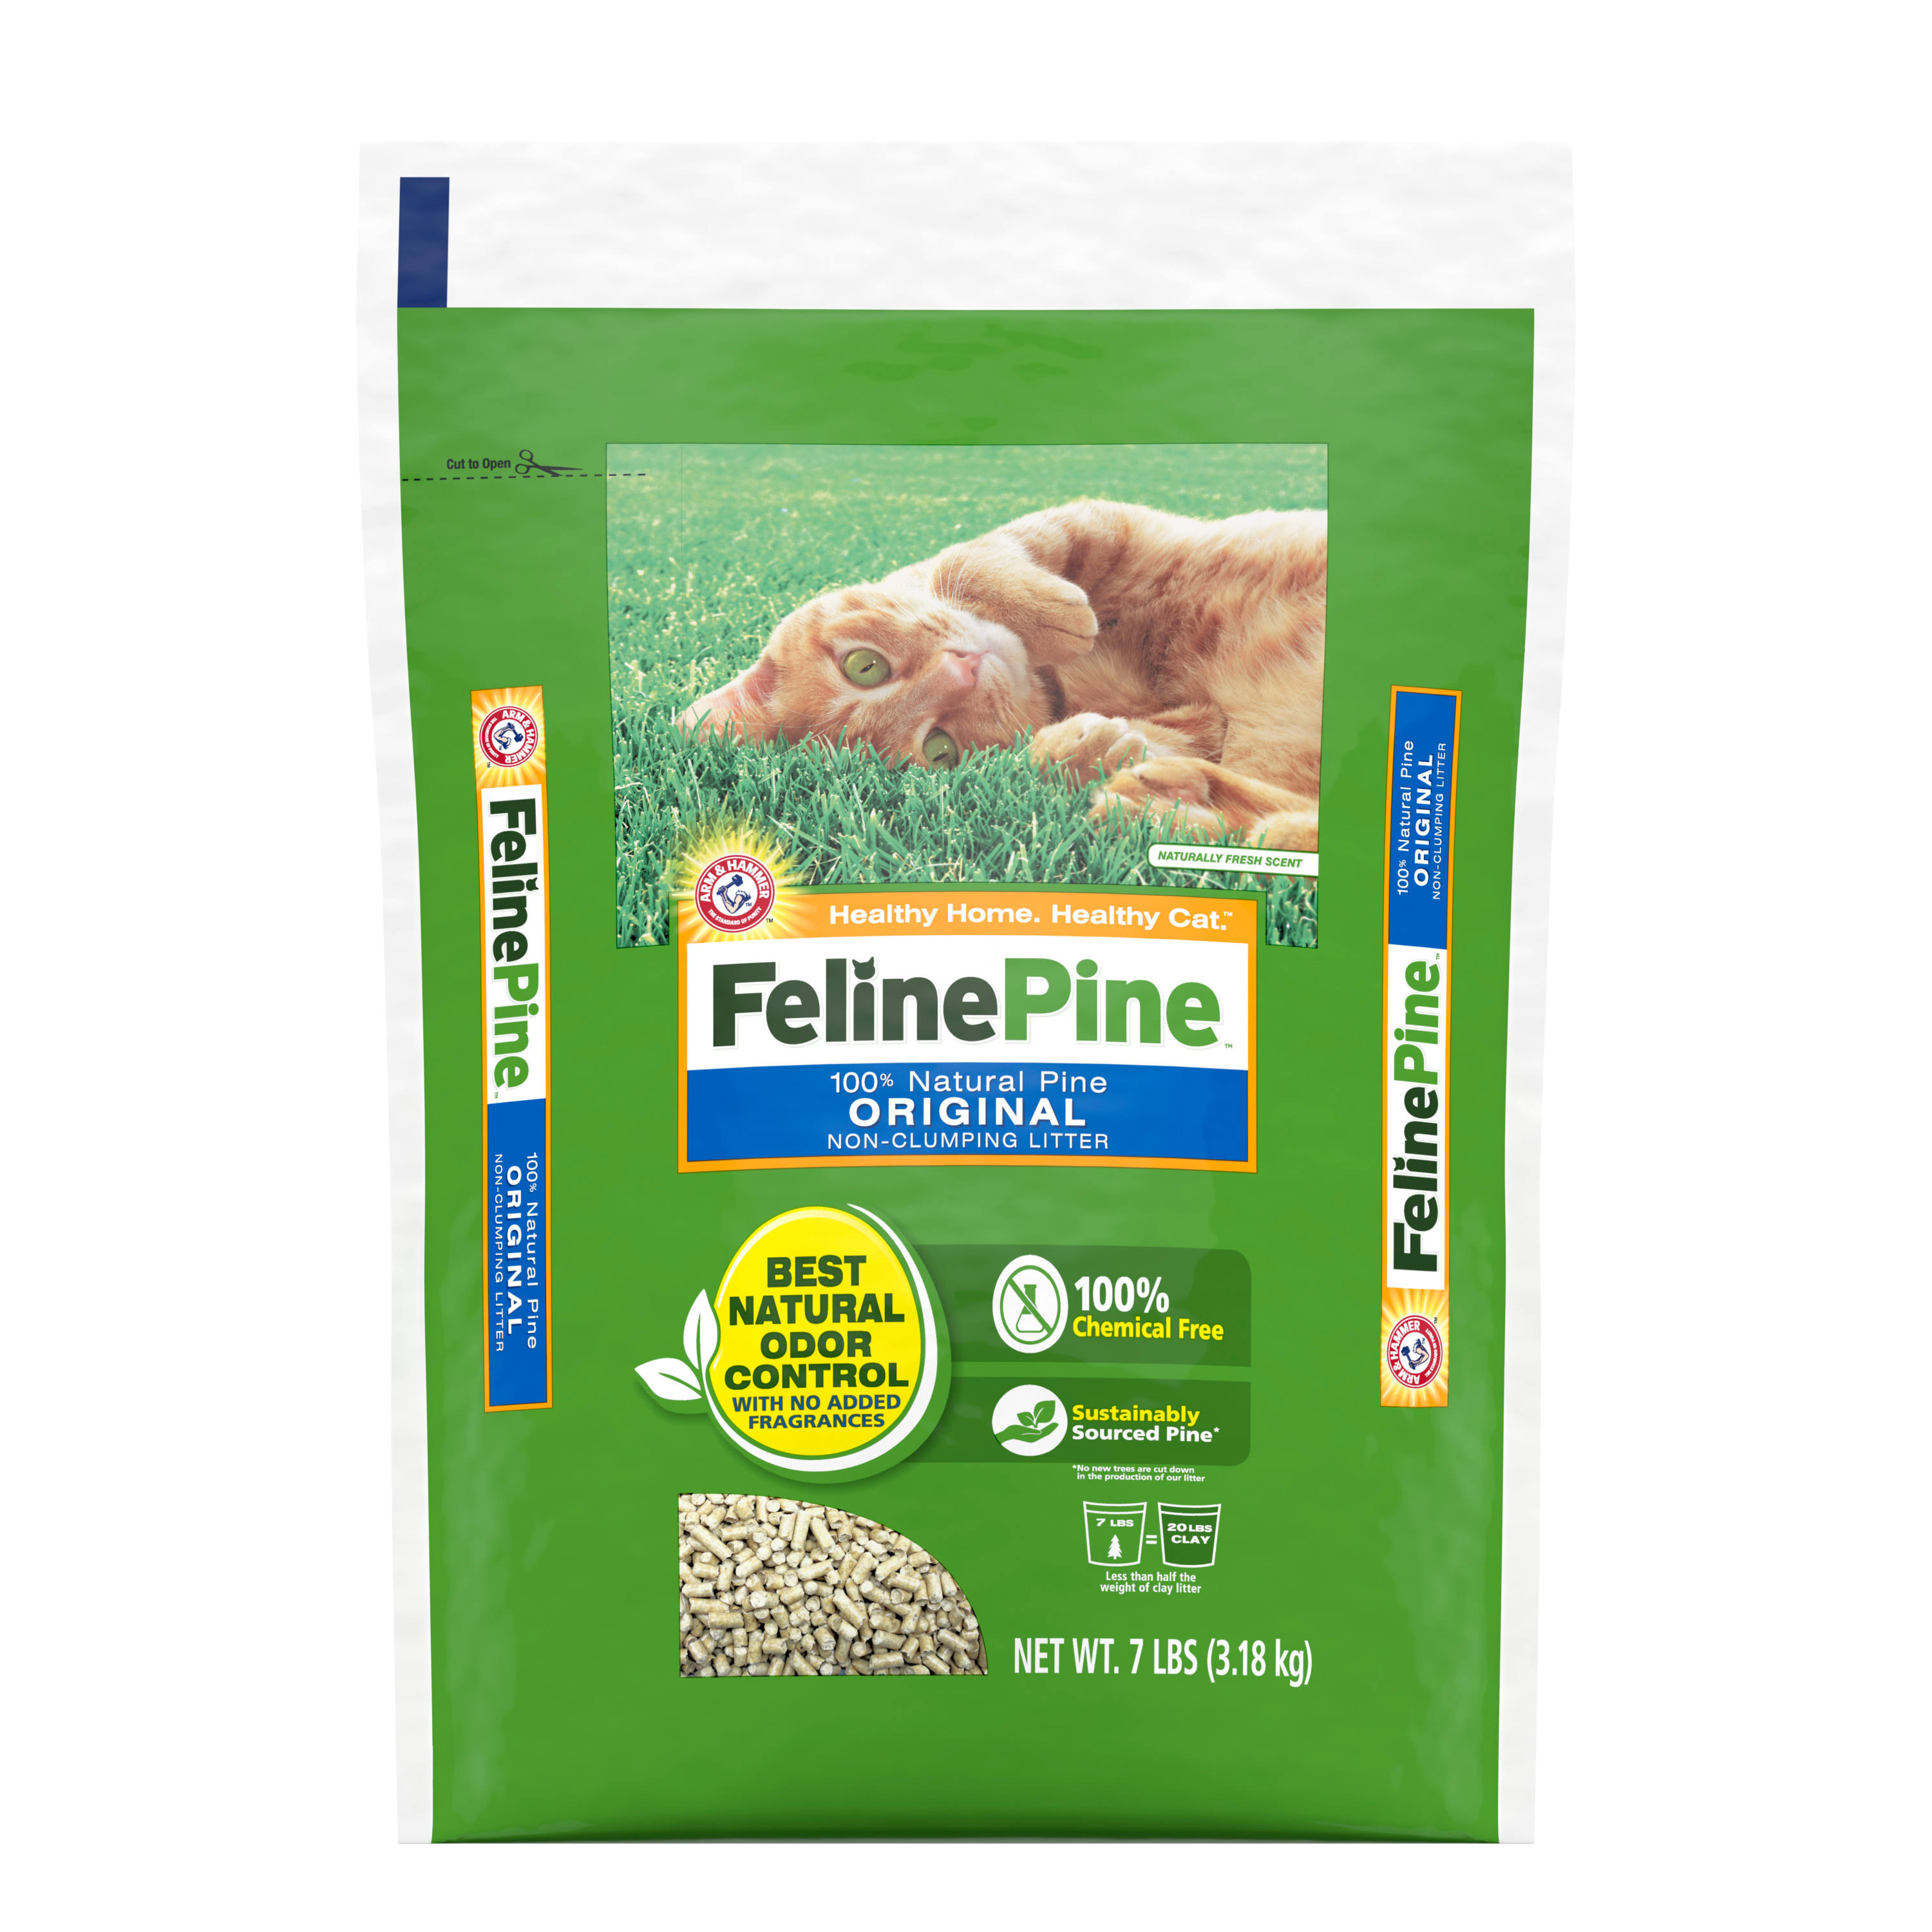 Feline Pine Original Cat Litter - 7lbs